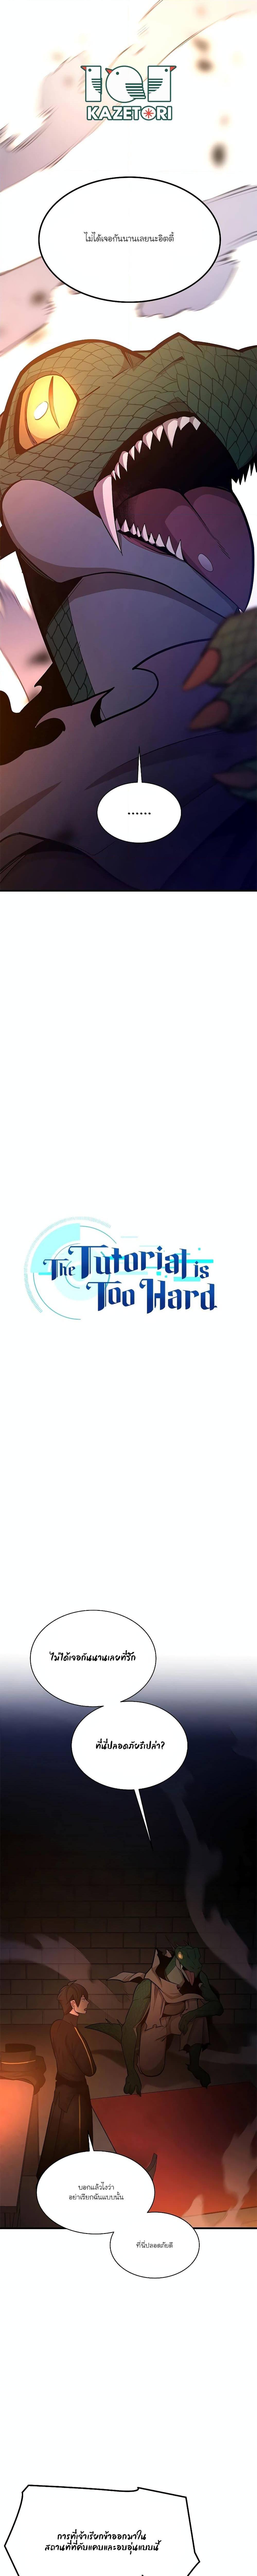 The Tutorial is Too Hard เธ•เธญเธเธ—เธตเน 153 (1)